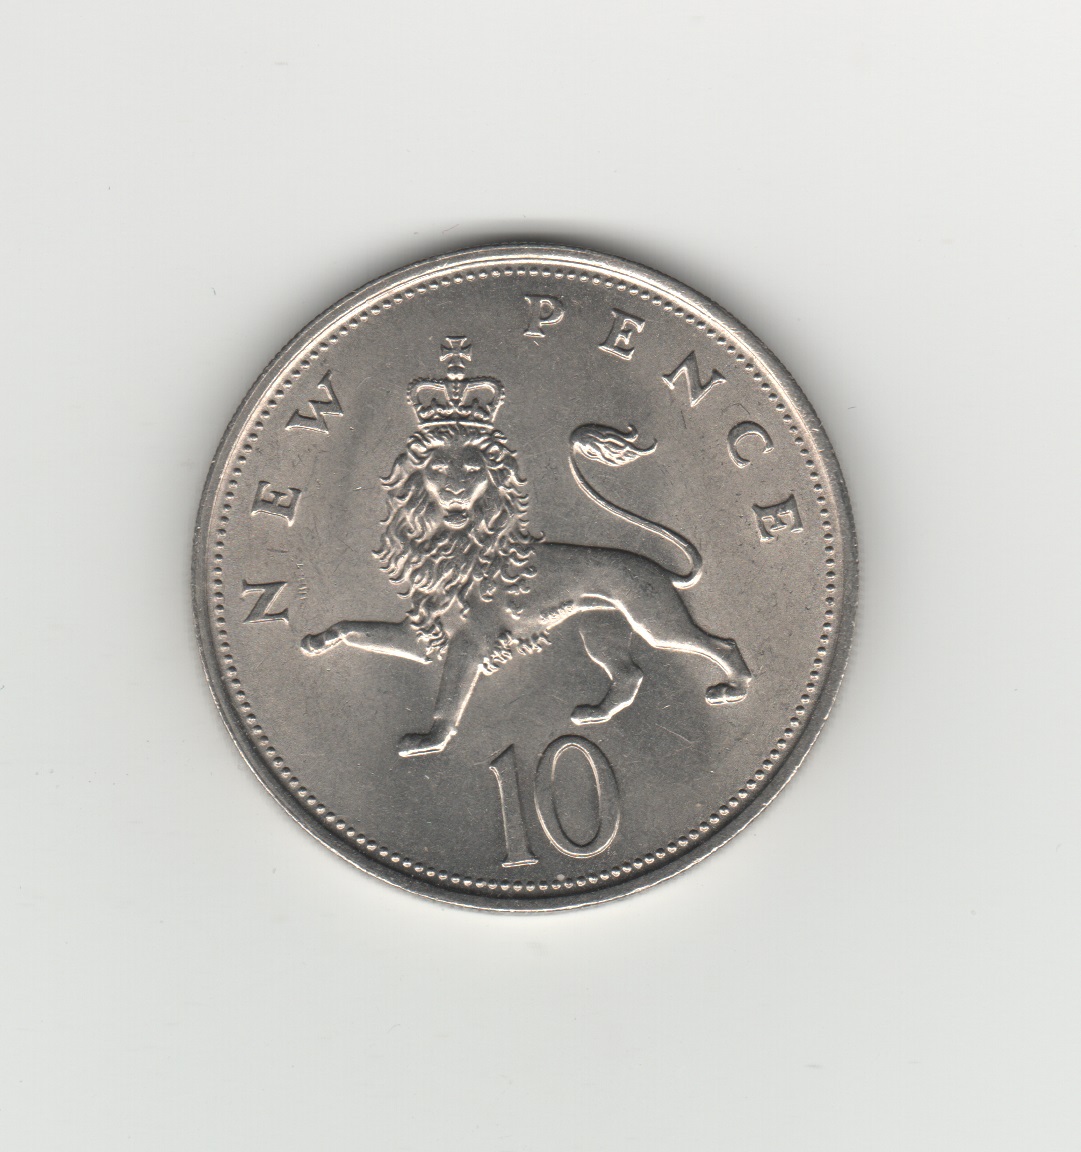  Großbritannien 10 Pence 1968   